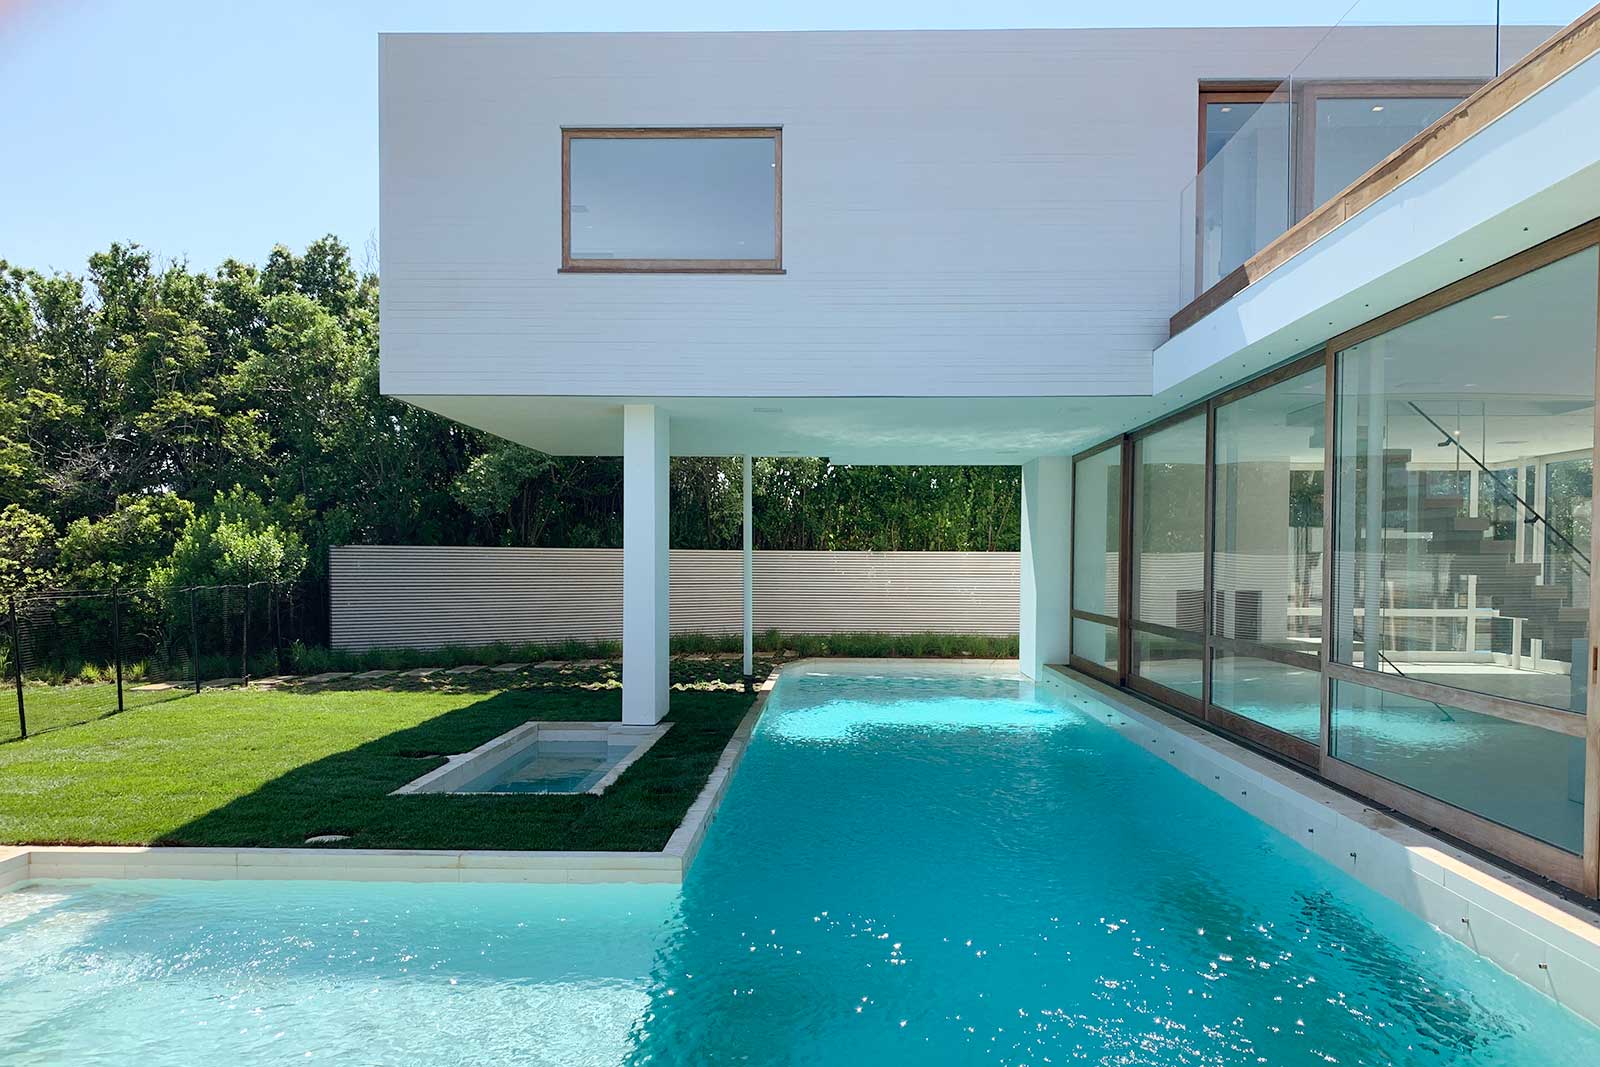 03-res4-resolution-4-architecture-modern-home-surfside-residence-renovation-pool.jpg